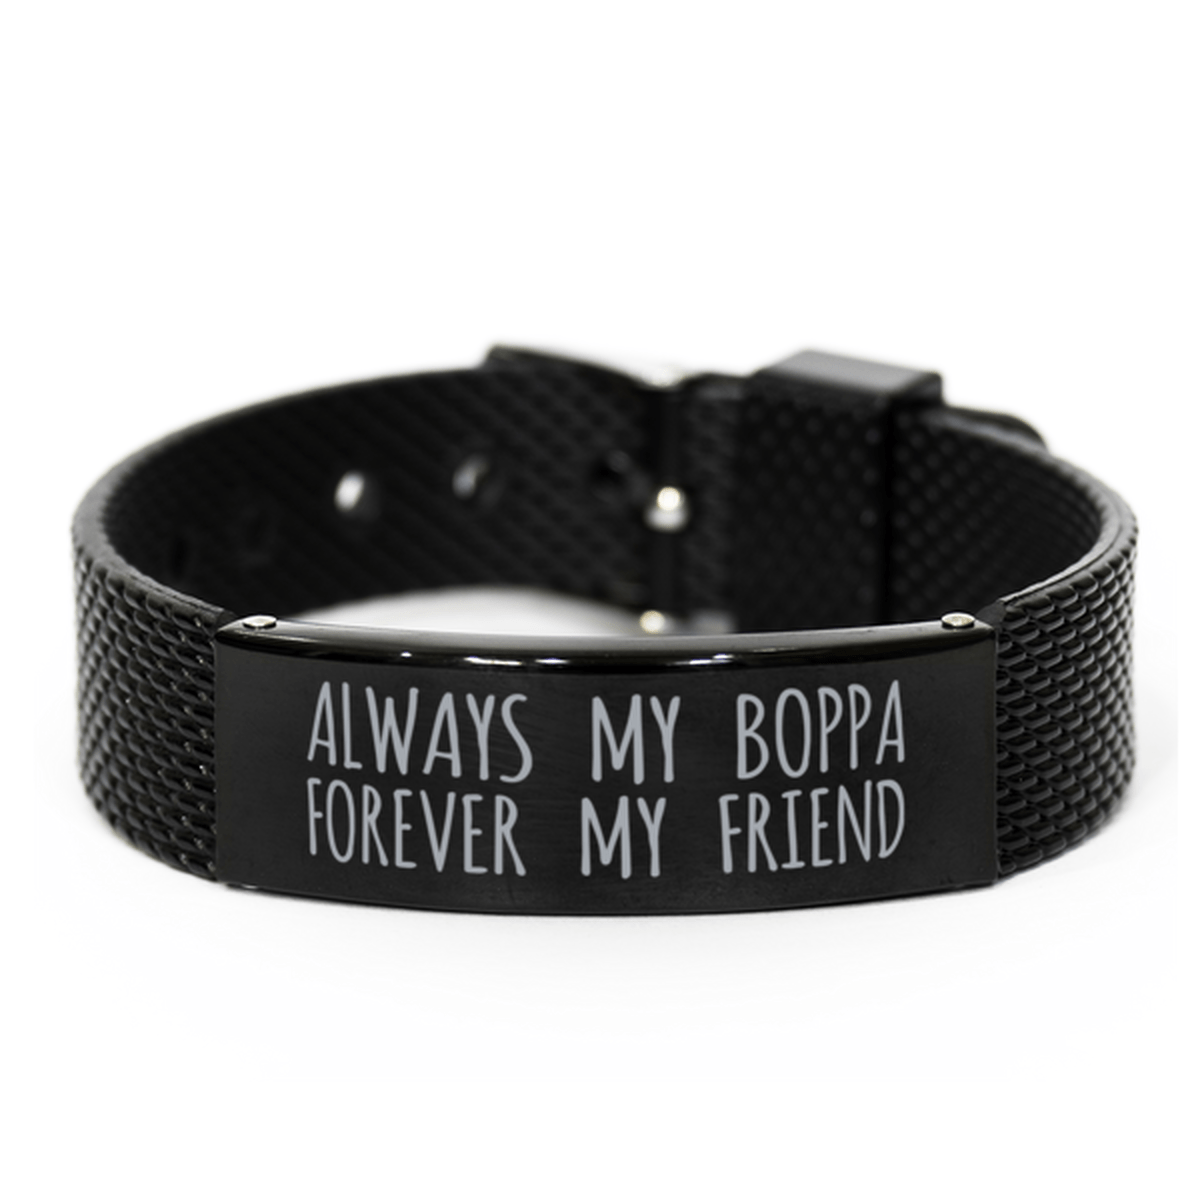 Inspirational Boppa Black Shark Mesh Bracelet, Always My Boppa Forever My Friend, Best Birthday Gifts for Family Friends